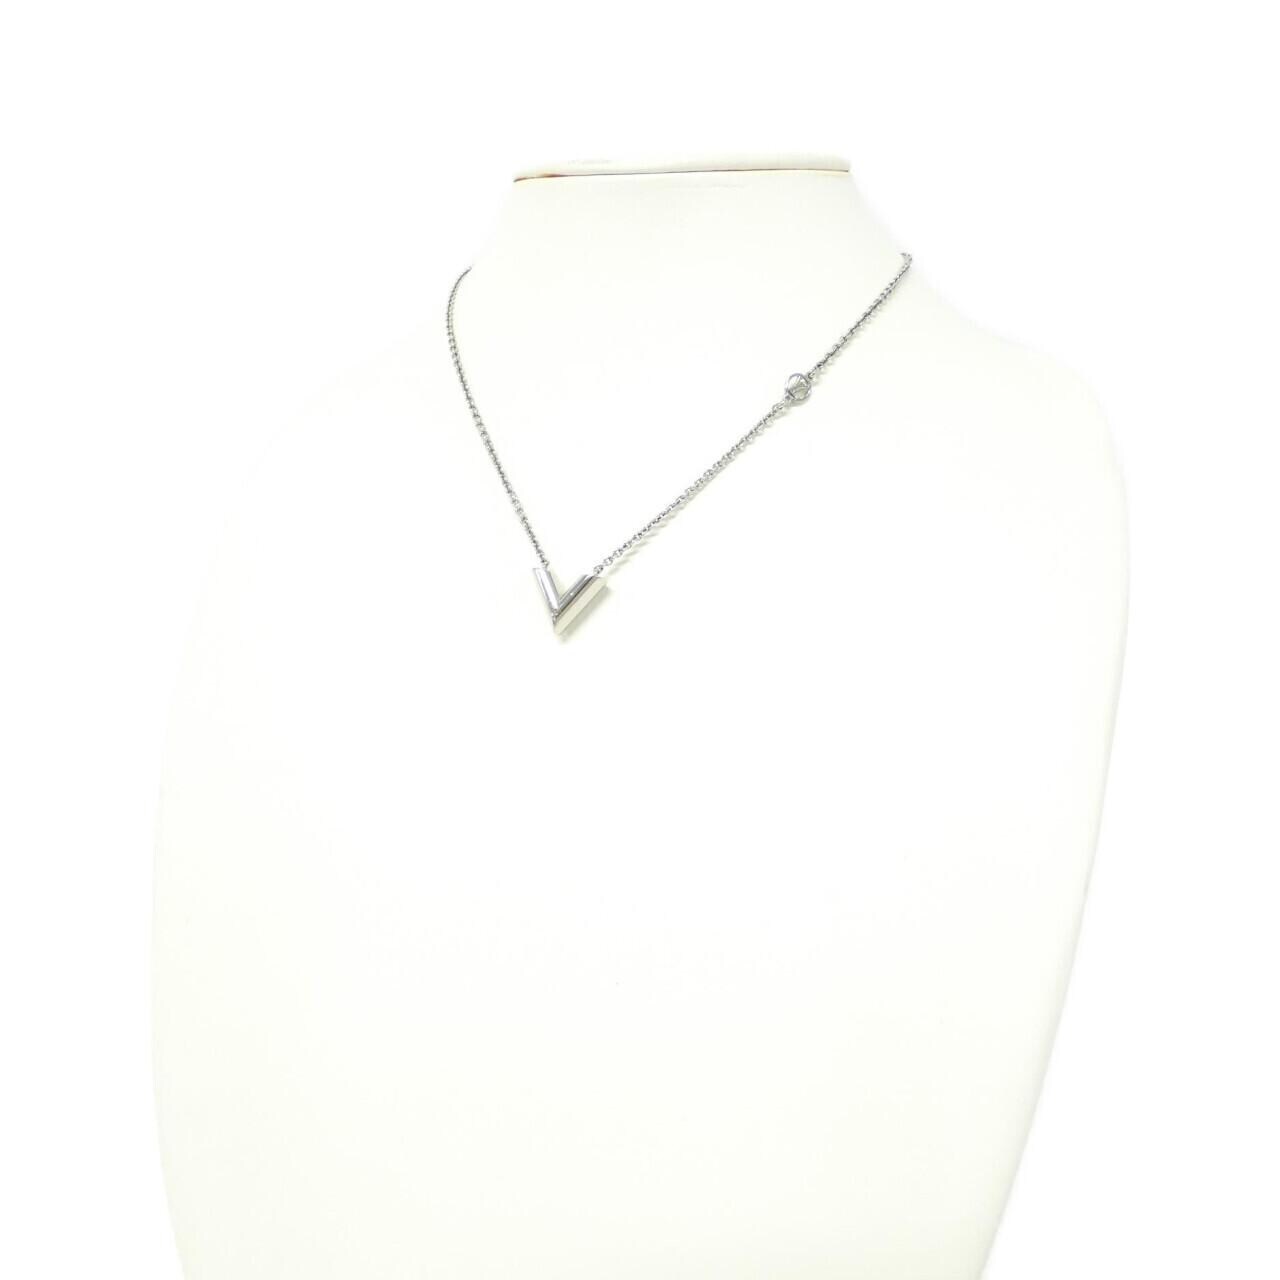 Louis Vuitton Collier Essential V California Dream Necklace M69617 | eBay